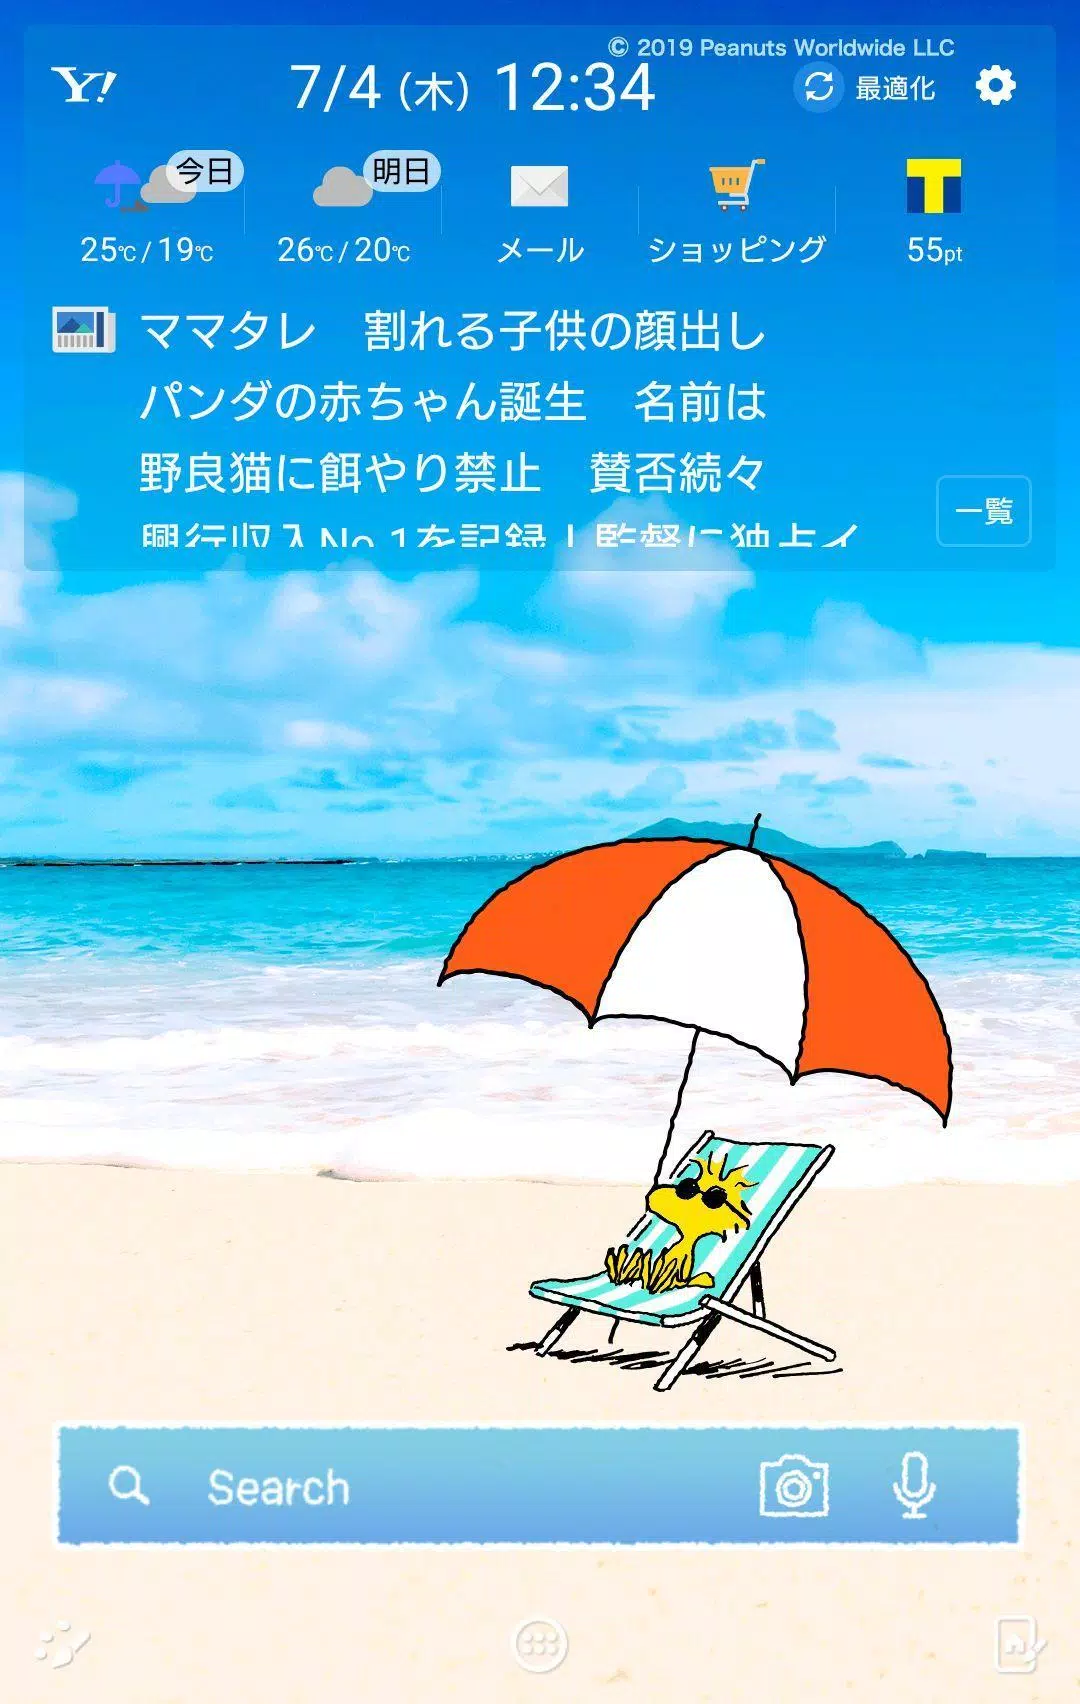 Skachat スヌーピー 壁紙きせかえ 夏の海 Apk Dlya Android